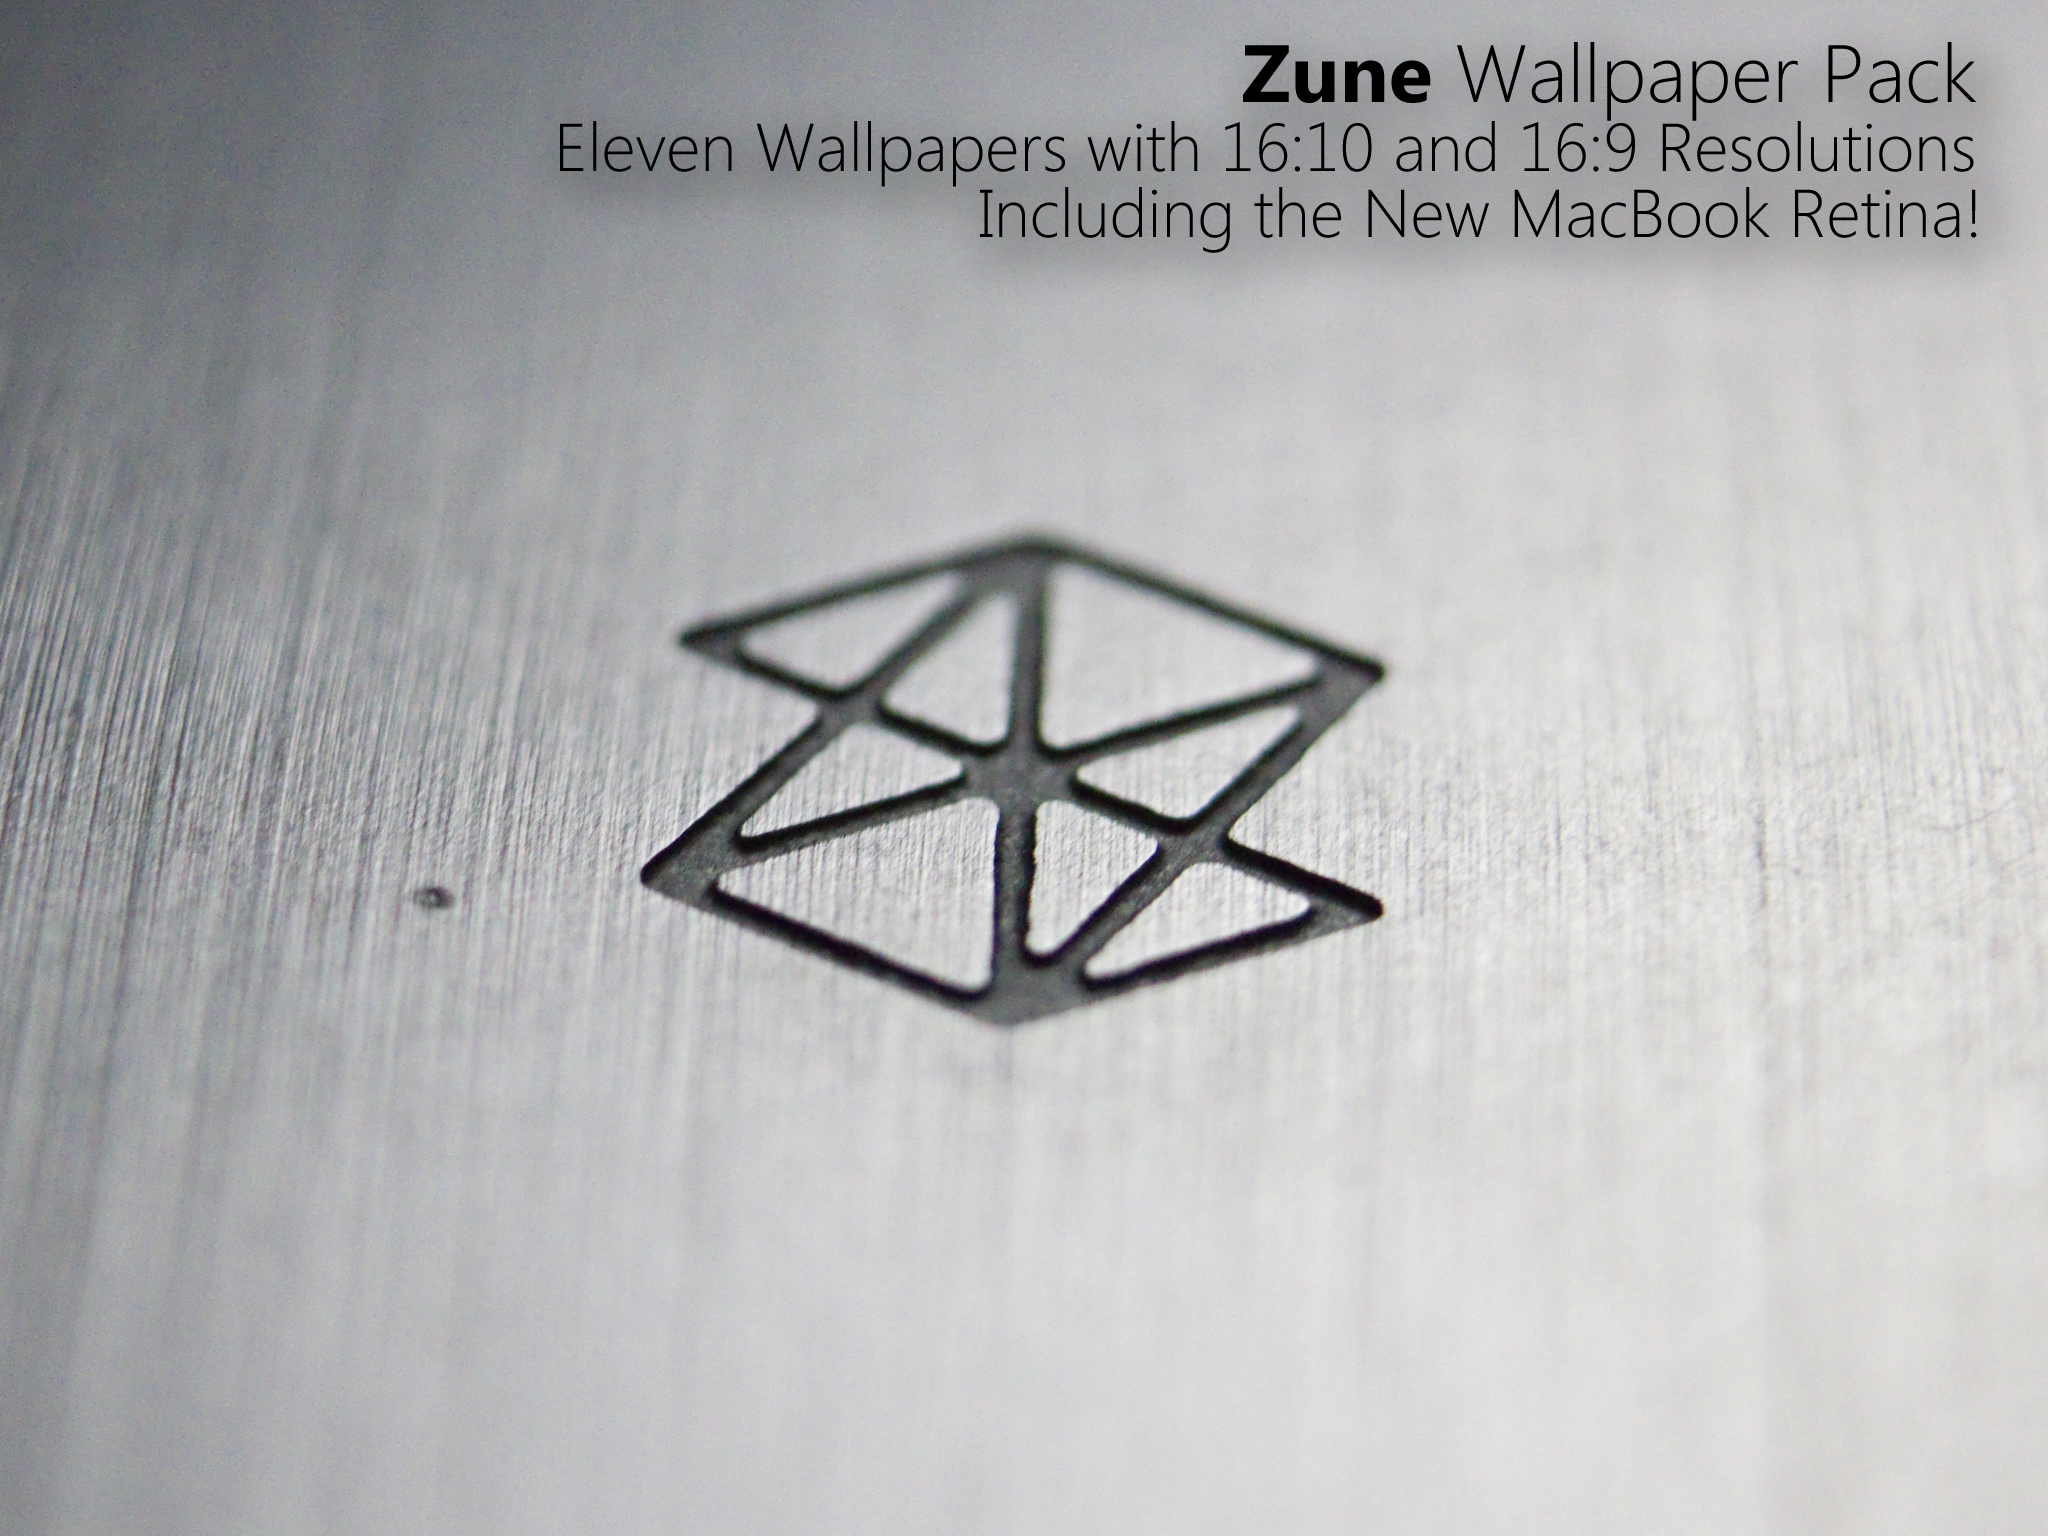 Zune Wallpaper Pack By Cj5